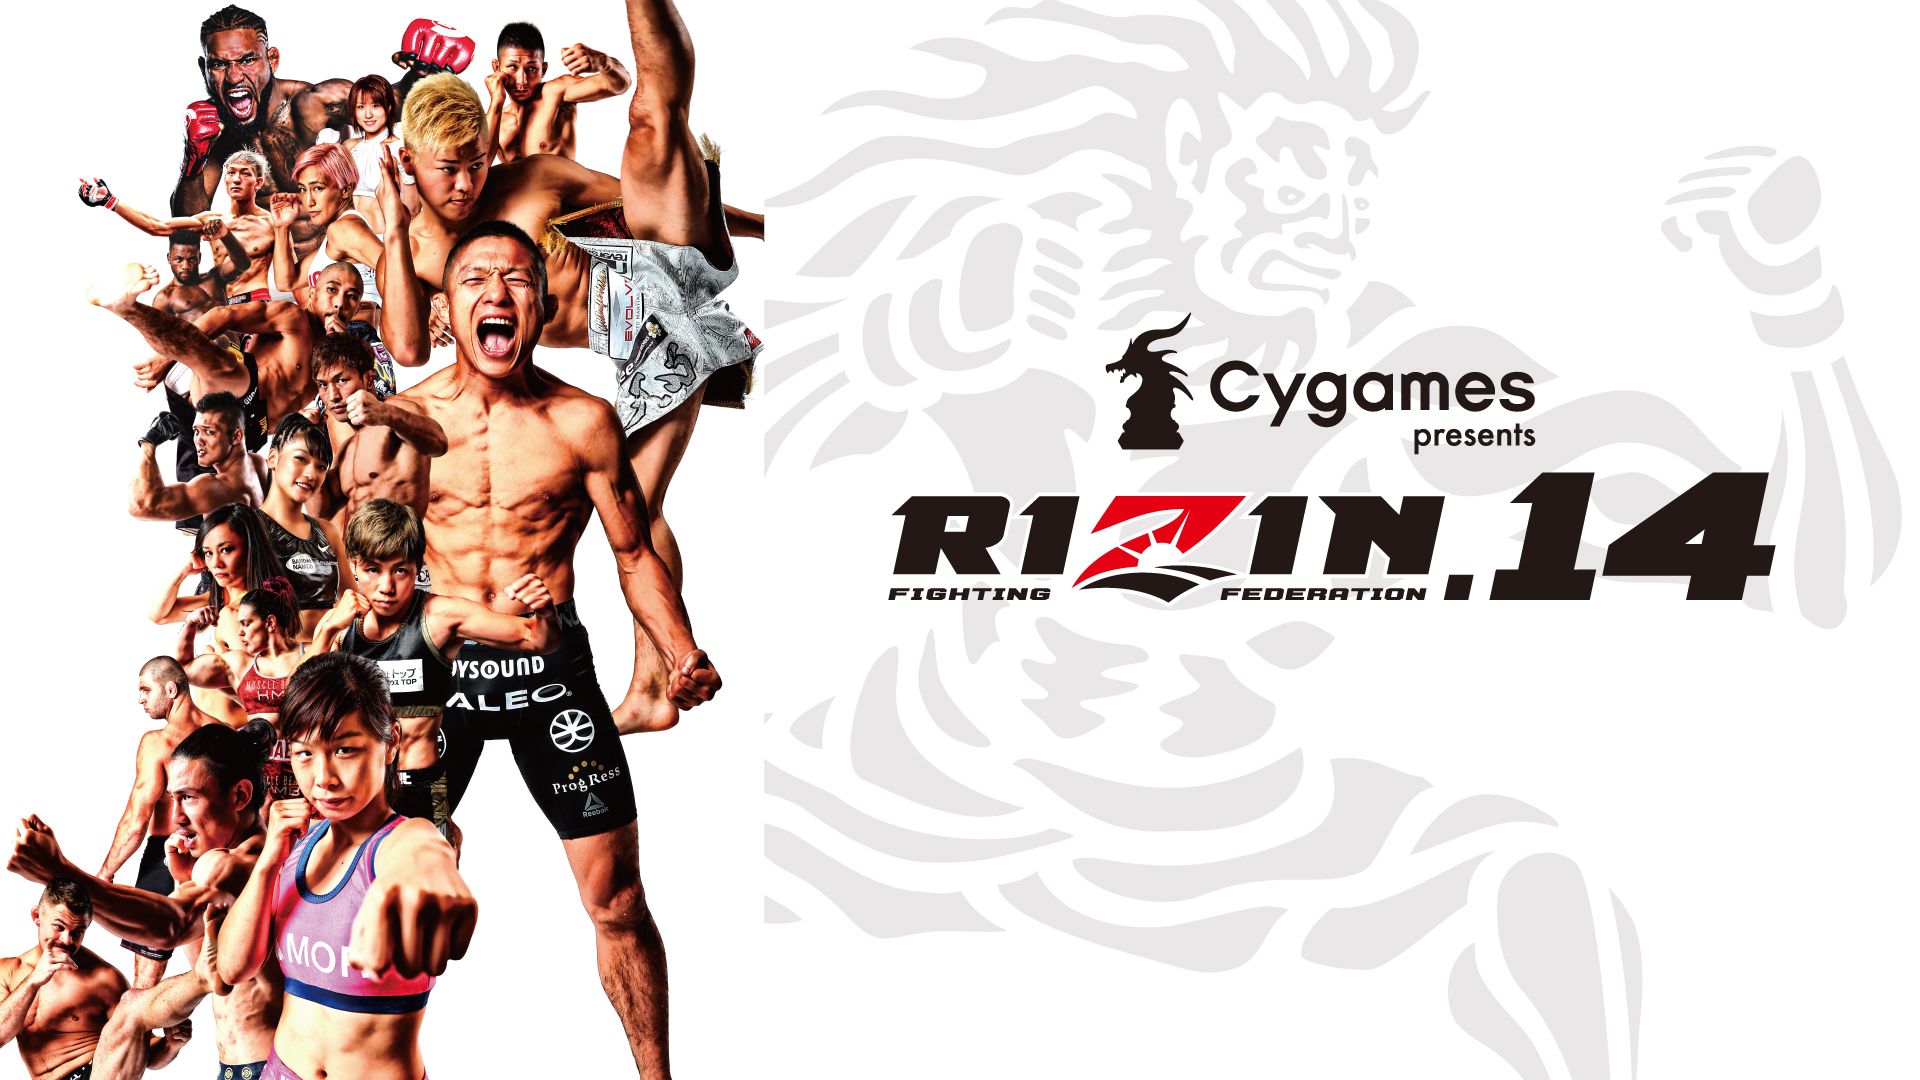 Cygames presents RIZIN.14